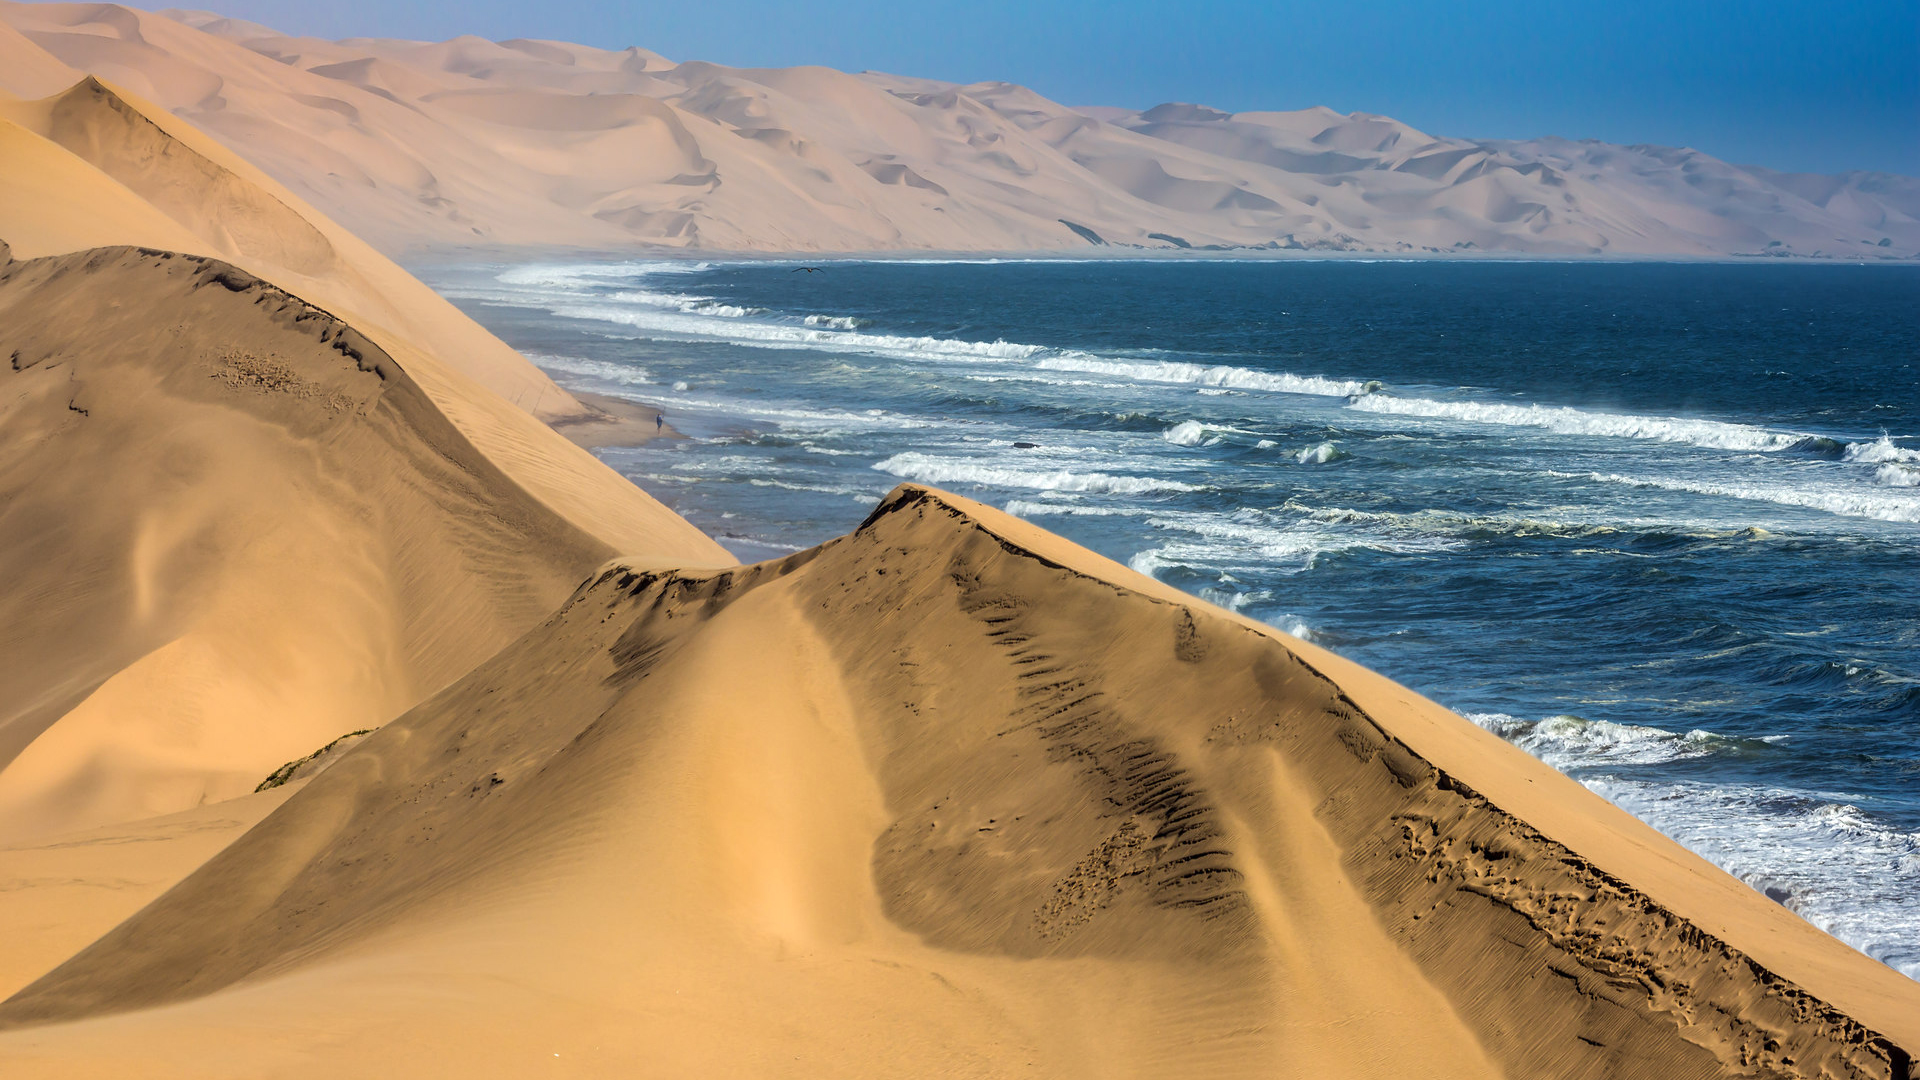 998743 descargar imagen tierra/naturaleza, paisaje, desierto, duna, namibia, océano, arena: fondos de pantalla y protectores de pantalla gratis